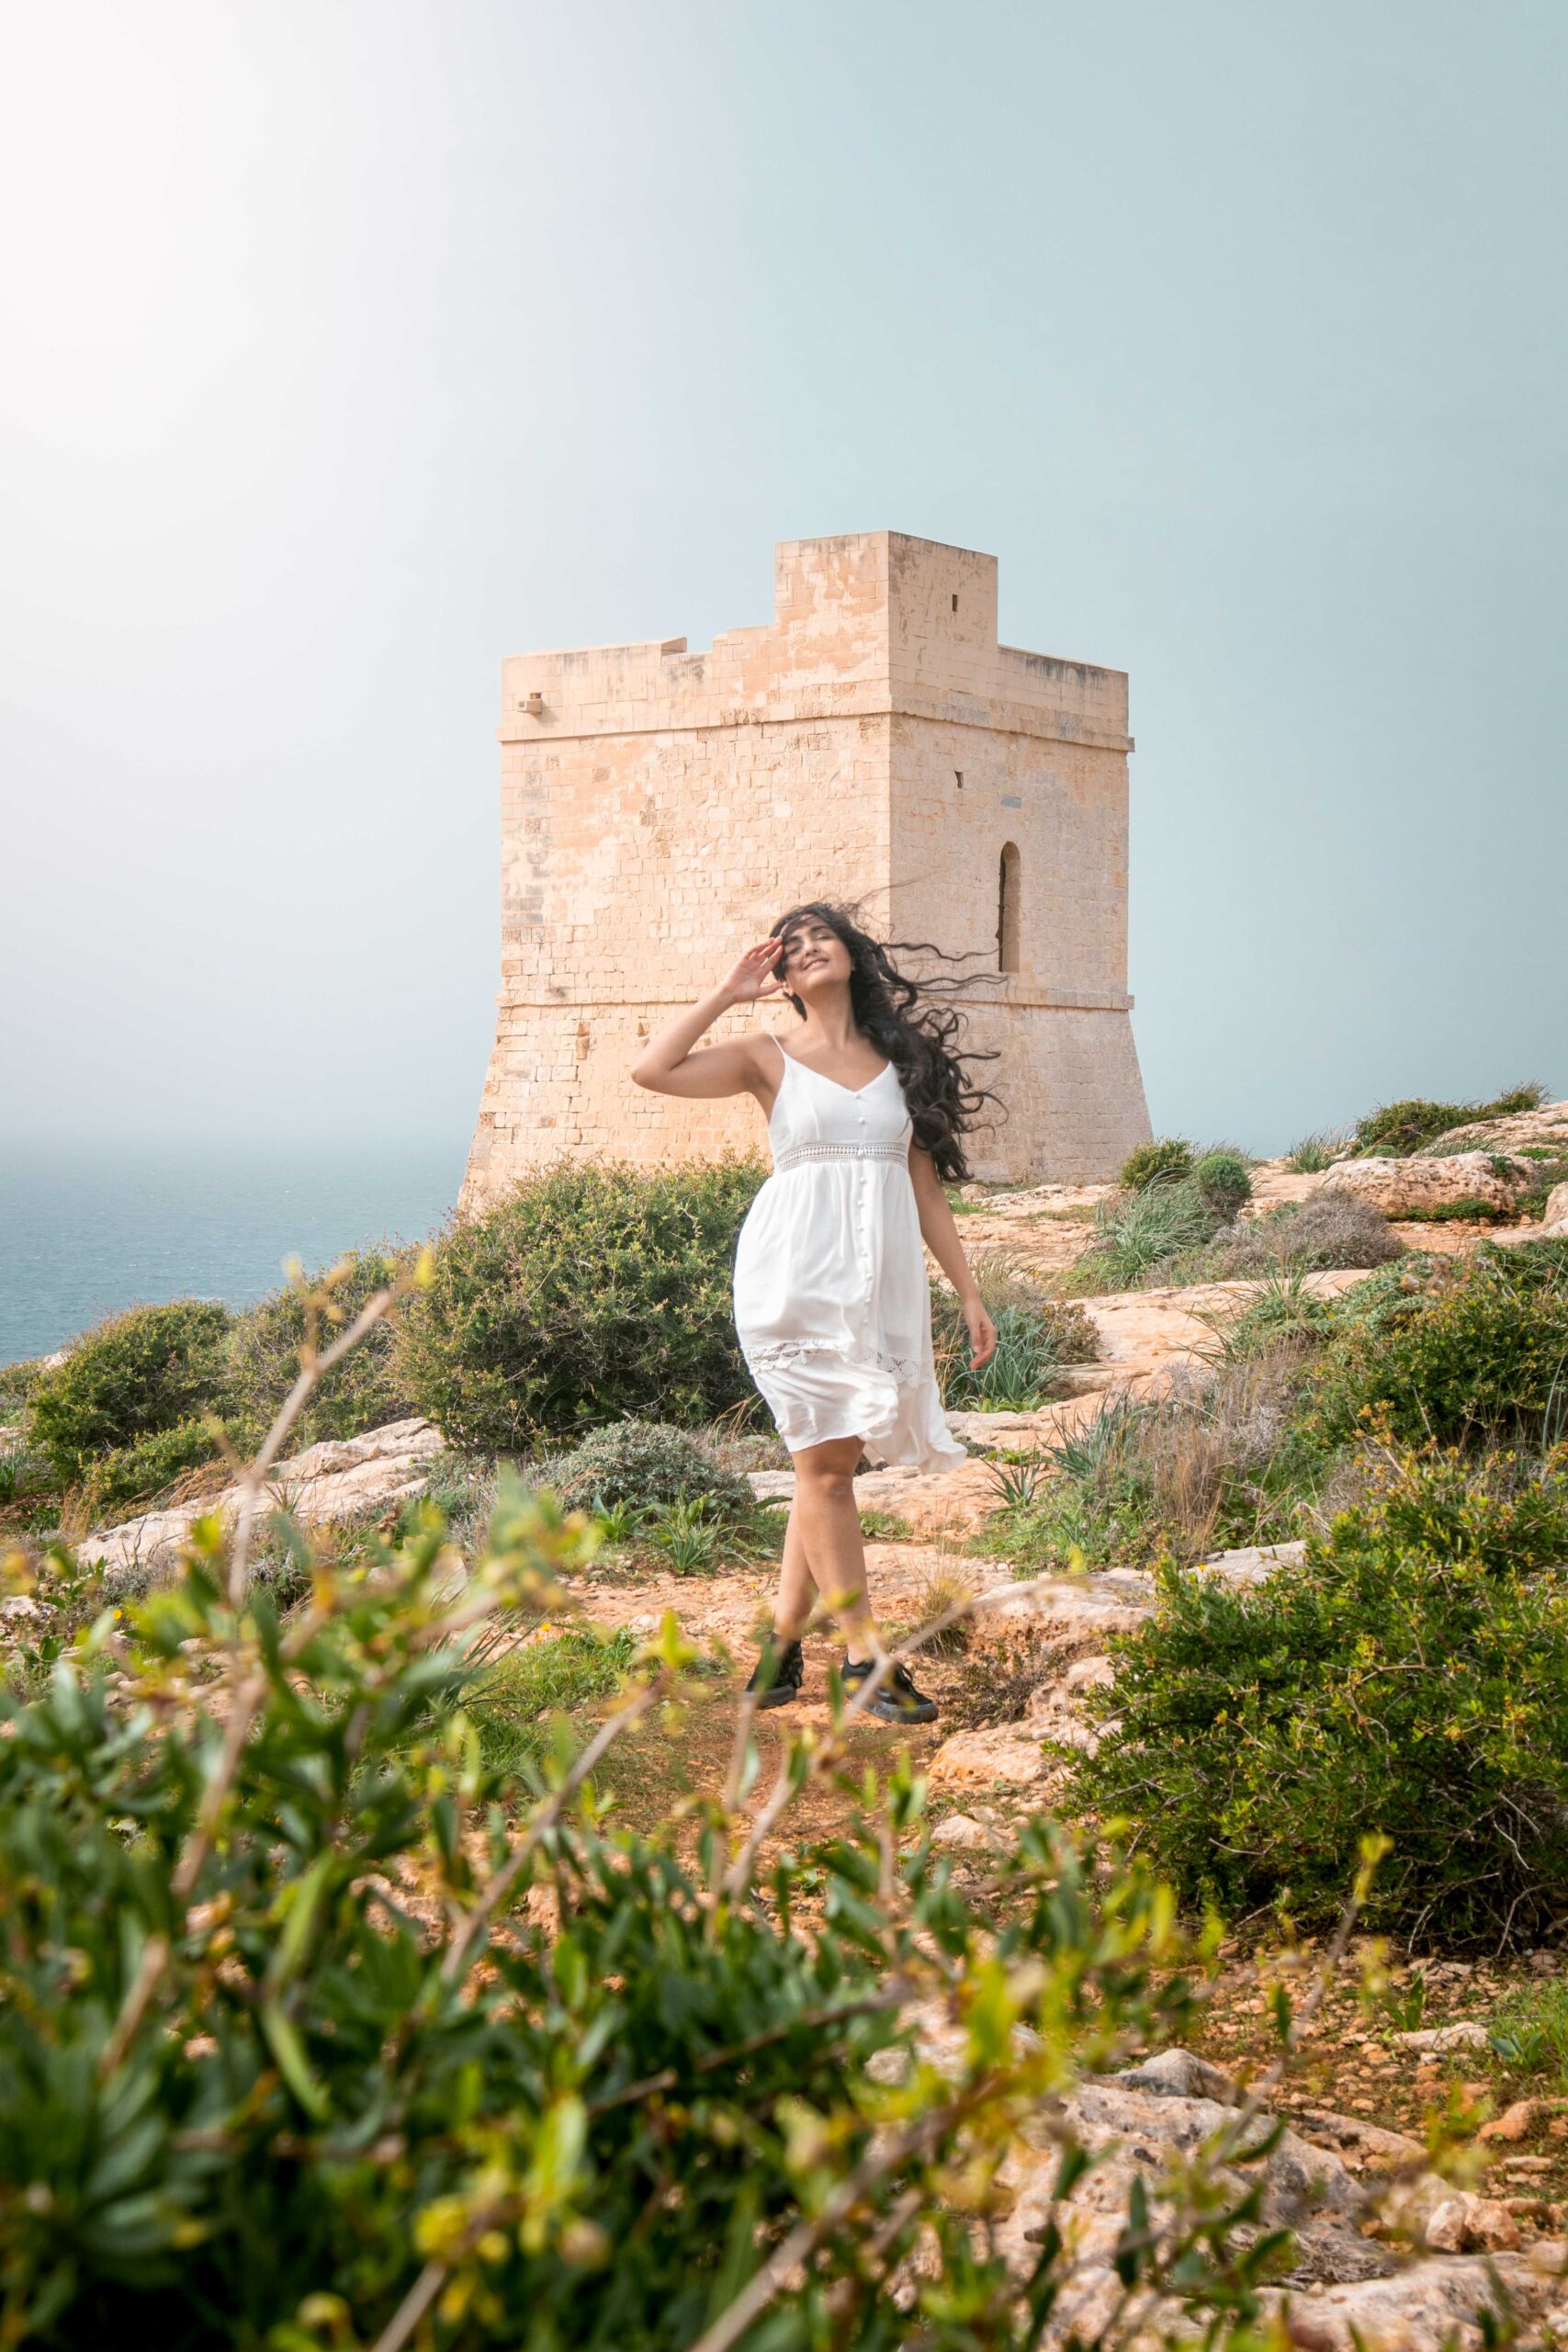 Woman wearing white dress standing in front of Ħamrija Coastal Tower in Malta